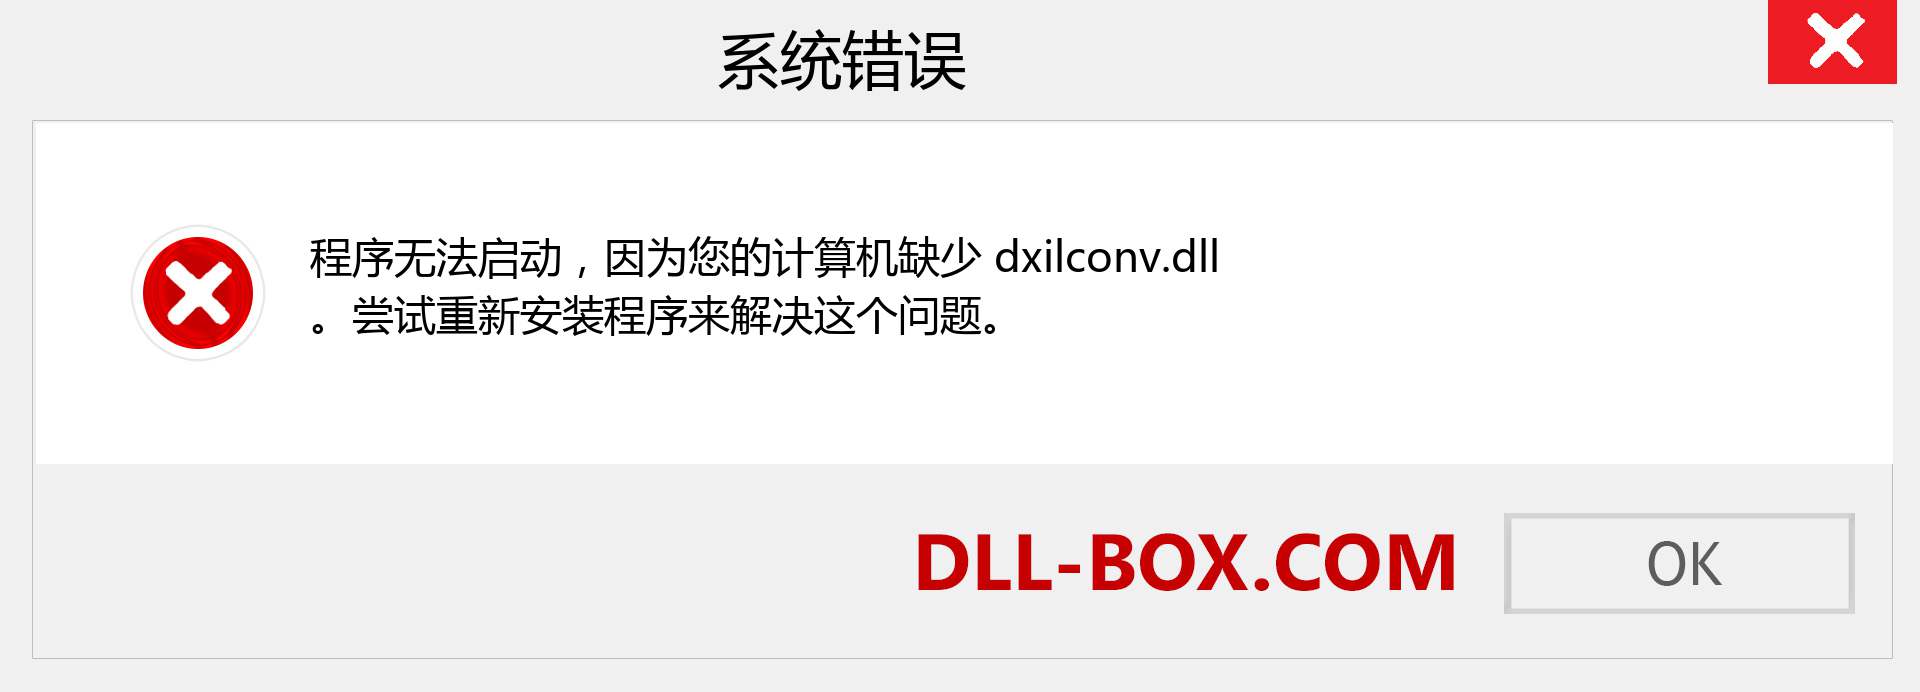 dxilconv.dll 文件丢失？。 适用于 Windows 7、8、10 的下载 - 修复 Windows、照片、图像上的 dxilconv dll 丢失错误